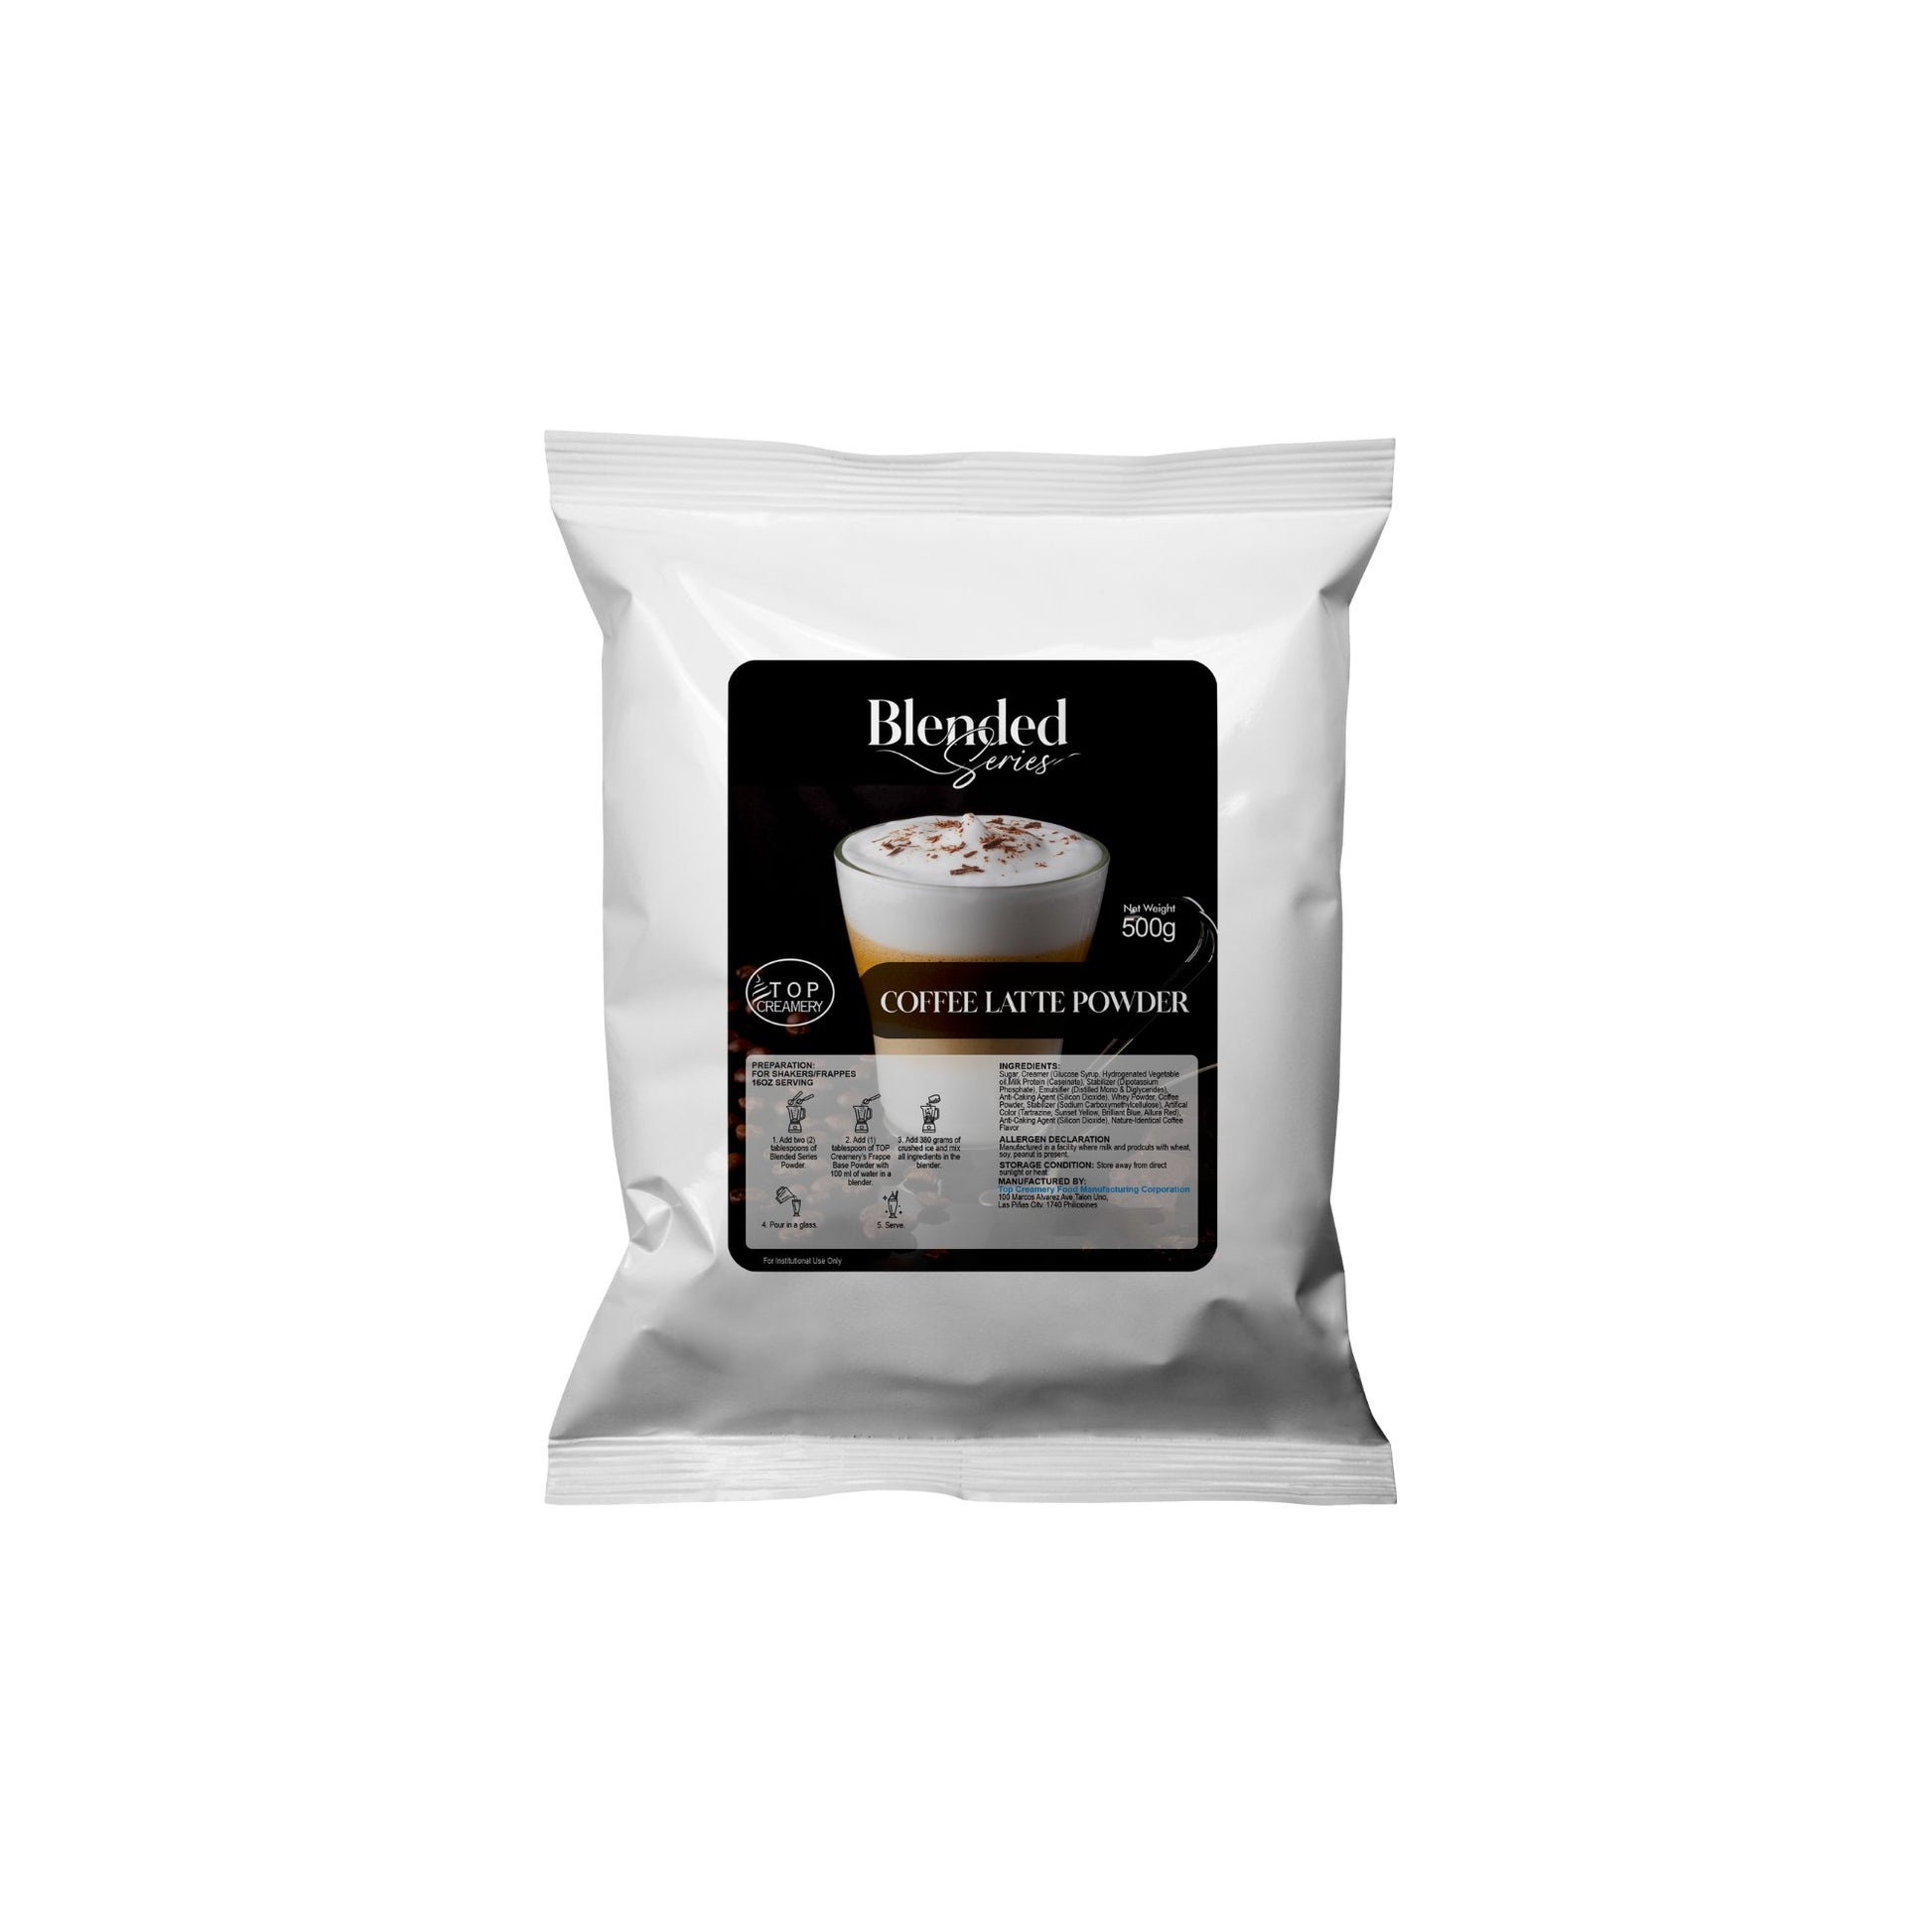 TOP Creamery Blended Series Coffee Latte Powder 500g - Kreme City Supplies